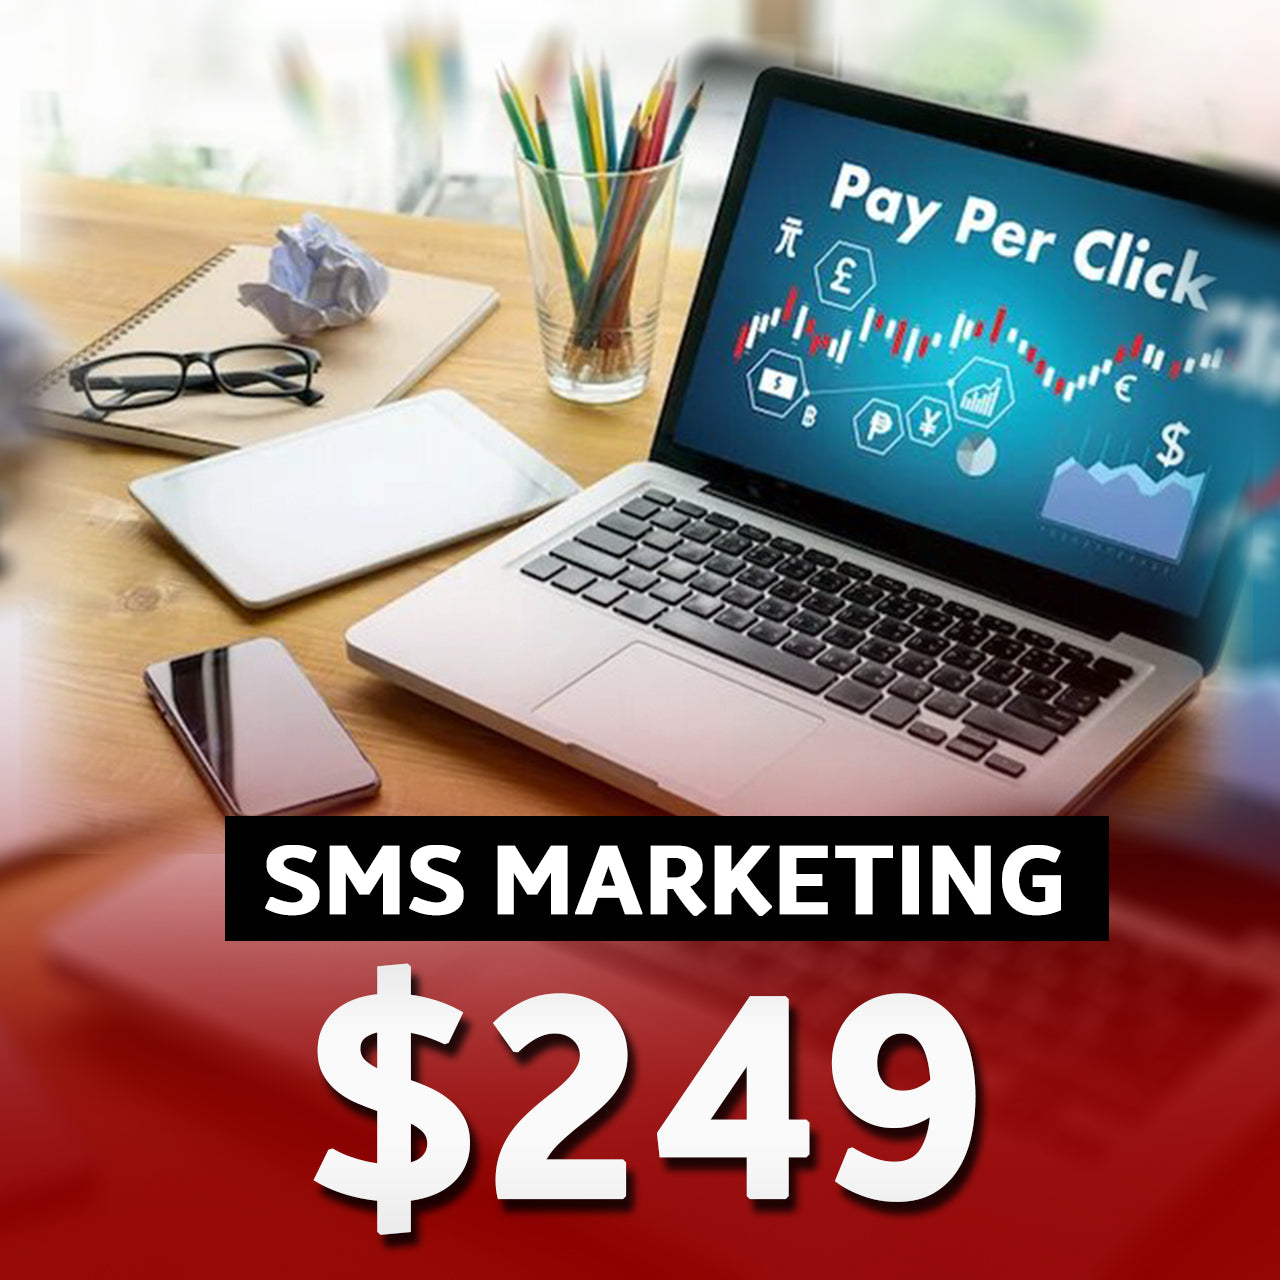 sms marketing-$249